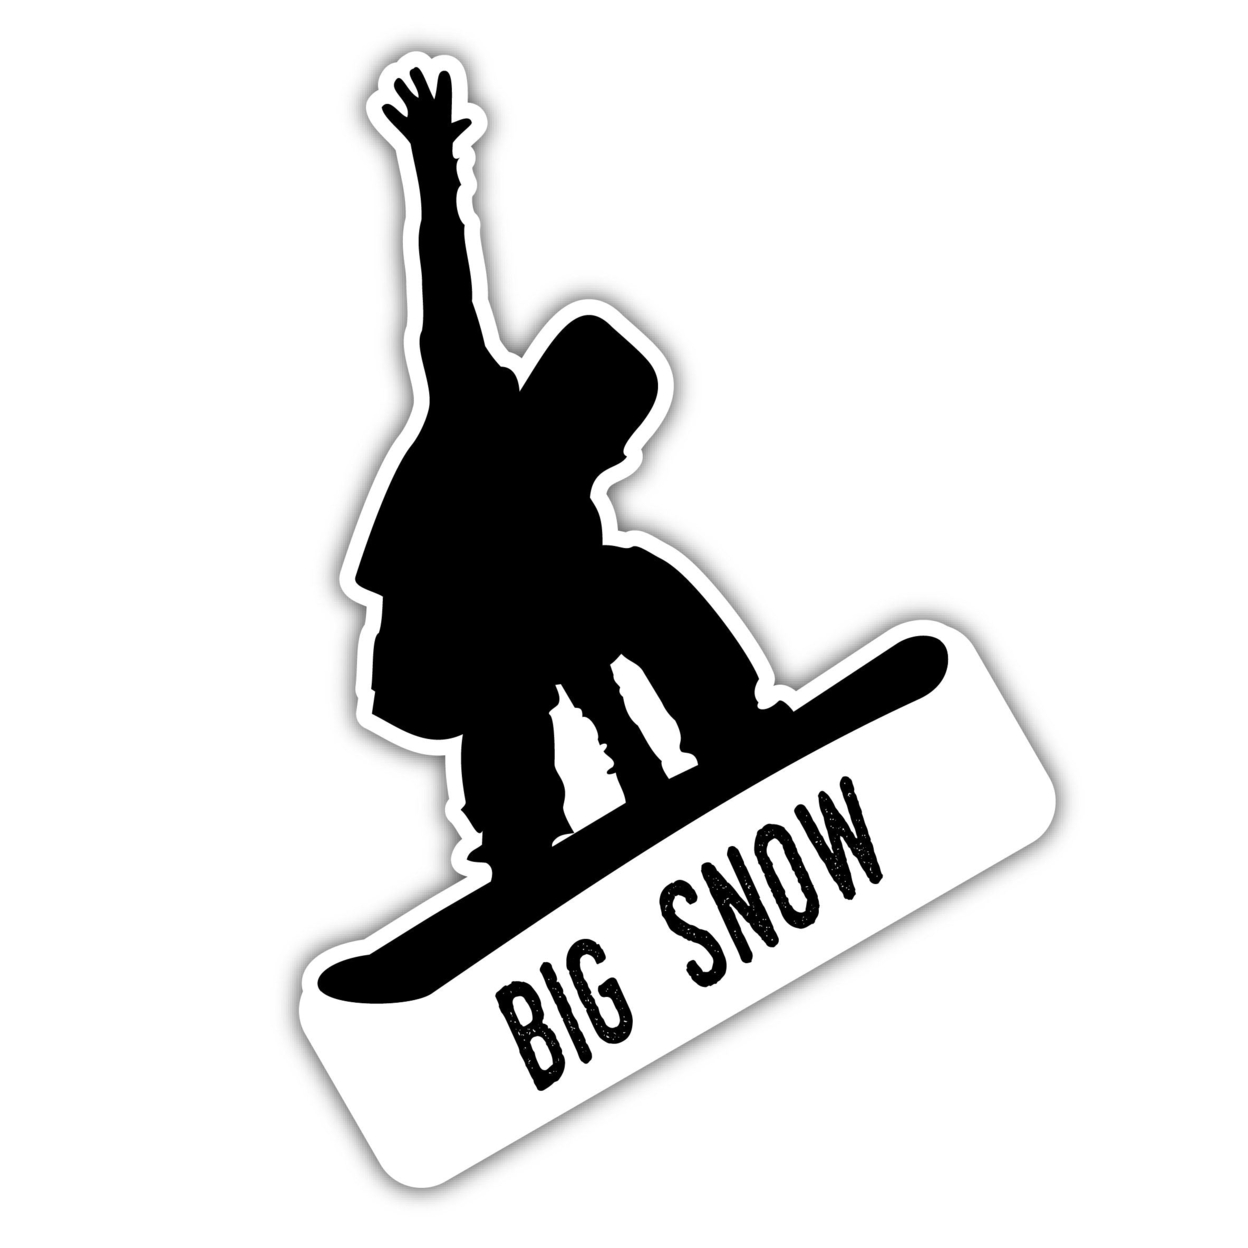 Big Snow Michigan Ski Adventures Souvenir Approximately 5 X 2.5-Inch Vinyl Decal Sticker Goggle Design